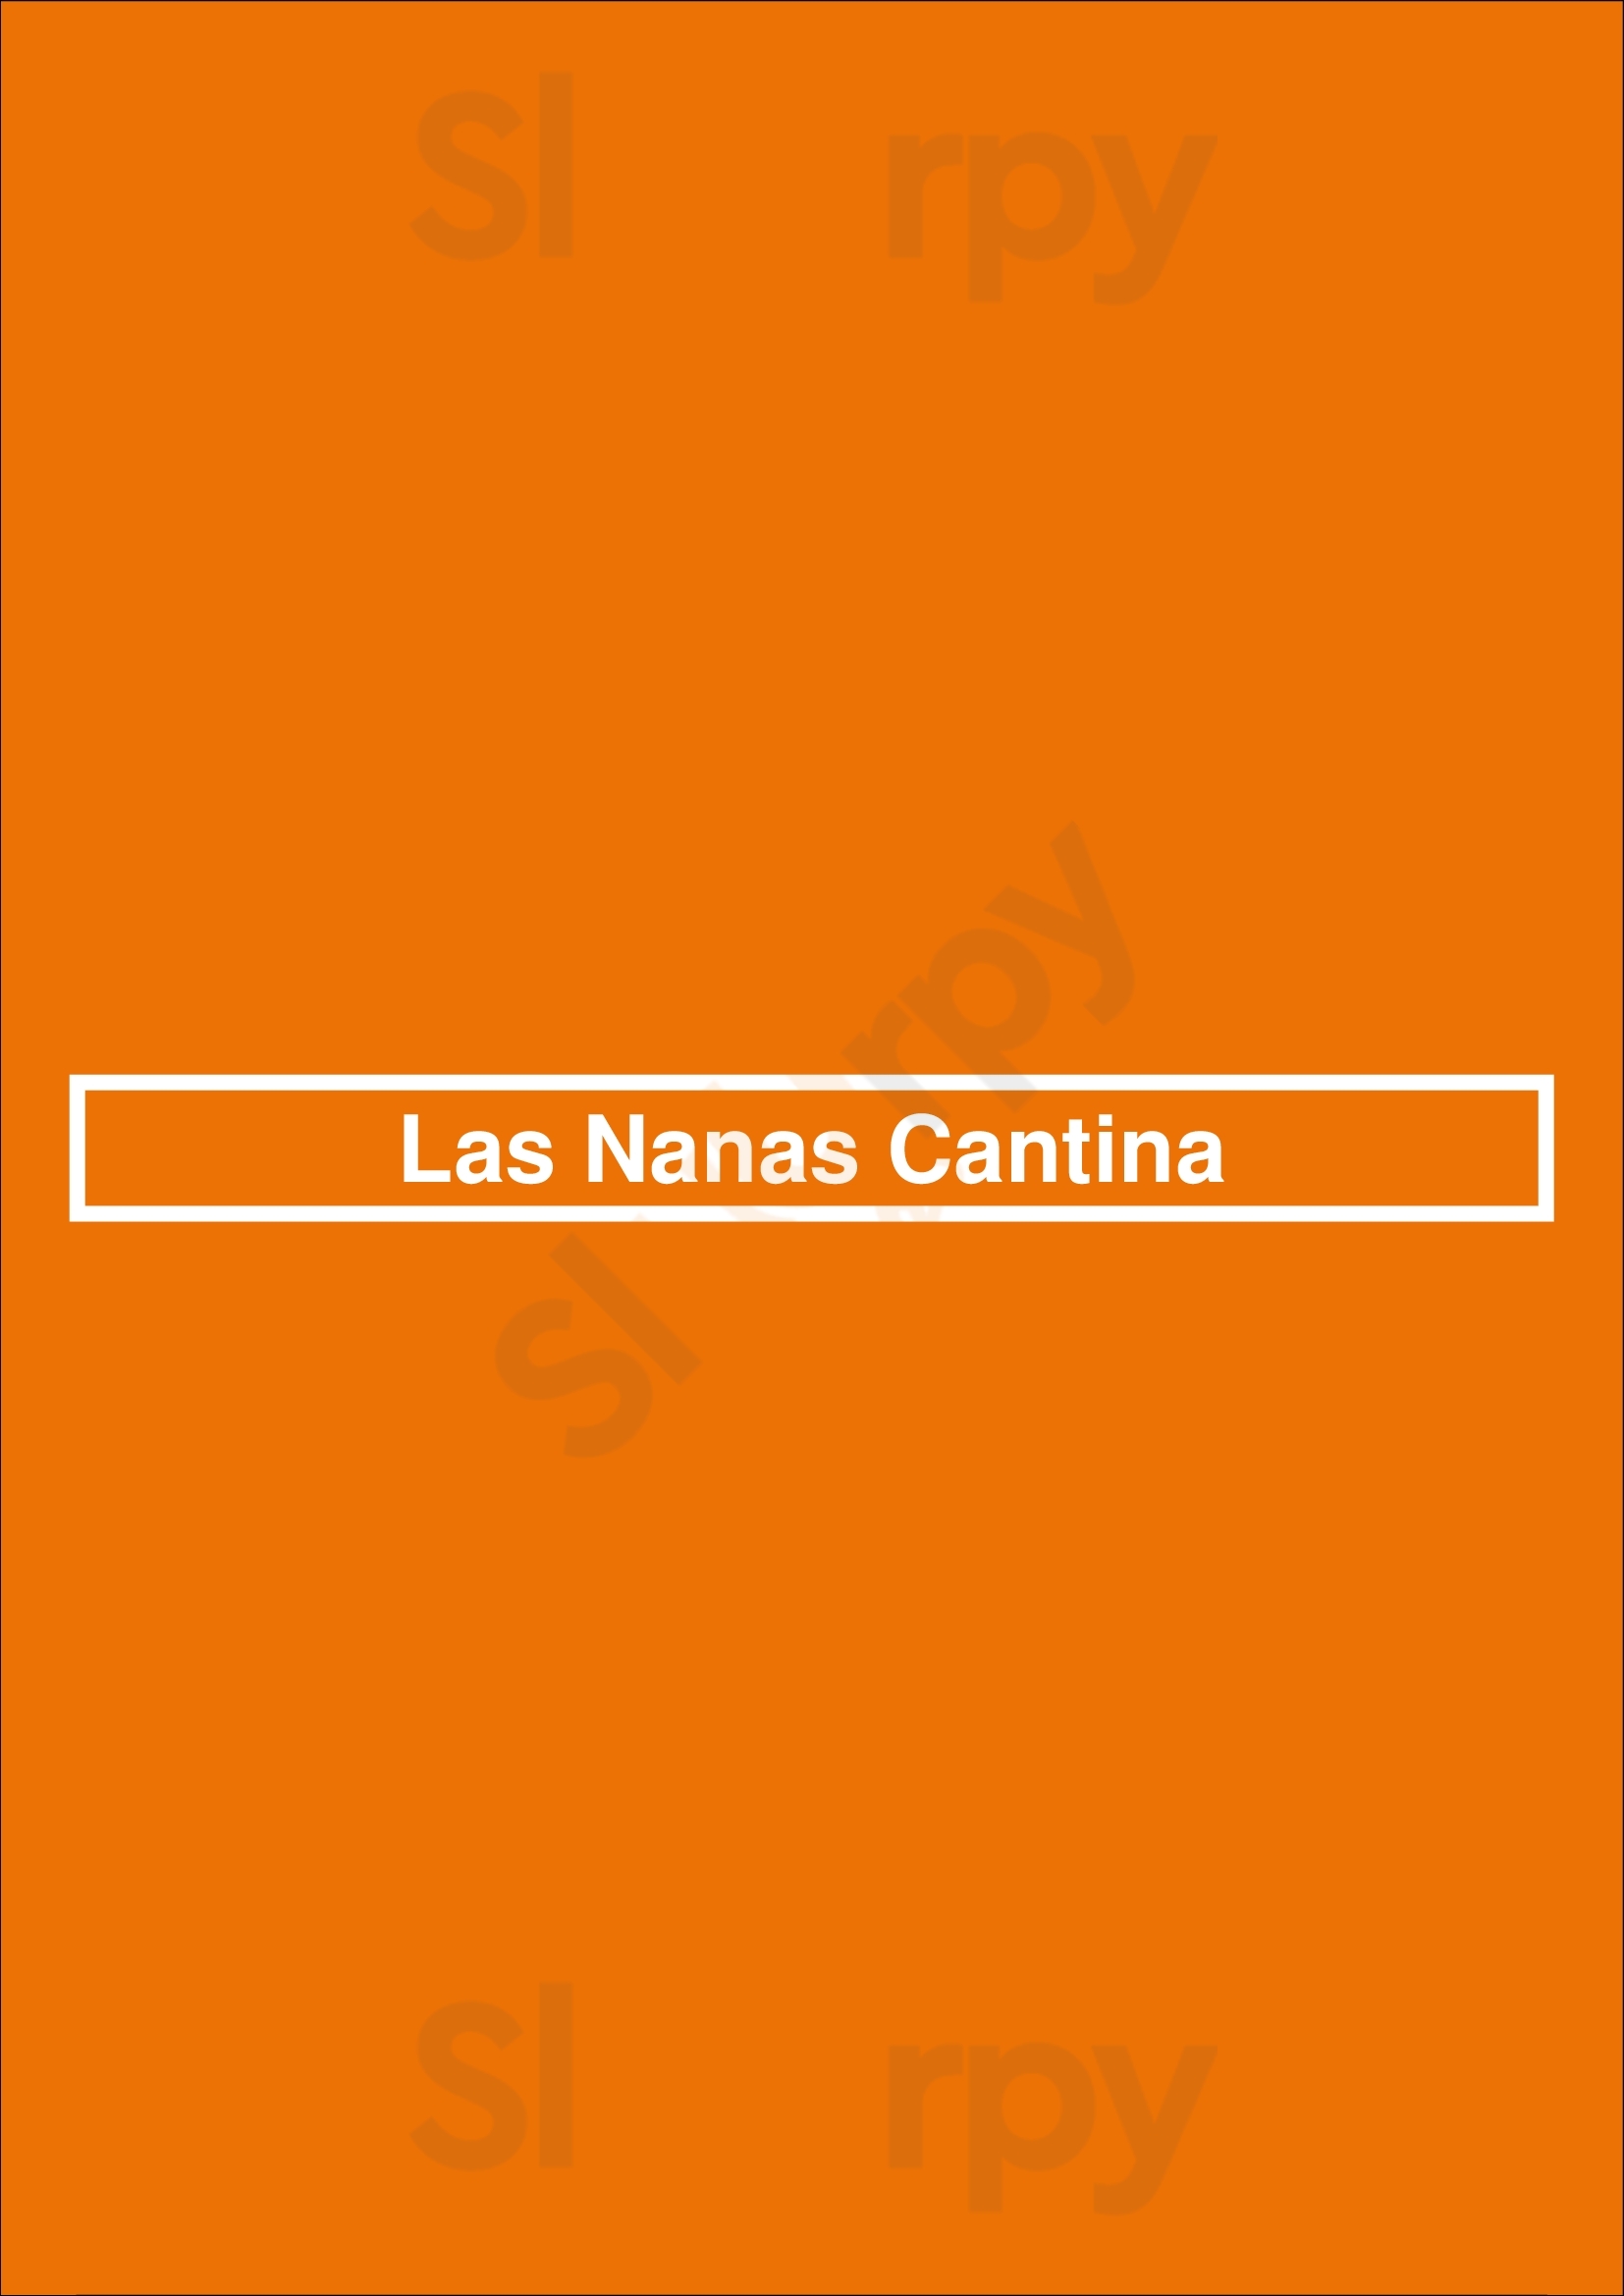 Las Nanas Cantina Carolina Menu - 1